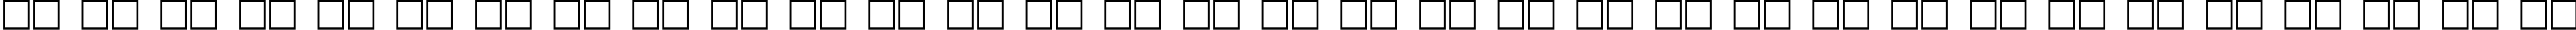 Пример написания русского алфавита шрифтом Geneva Plain:001.00190n